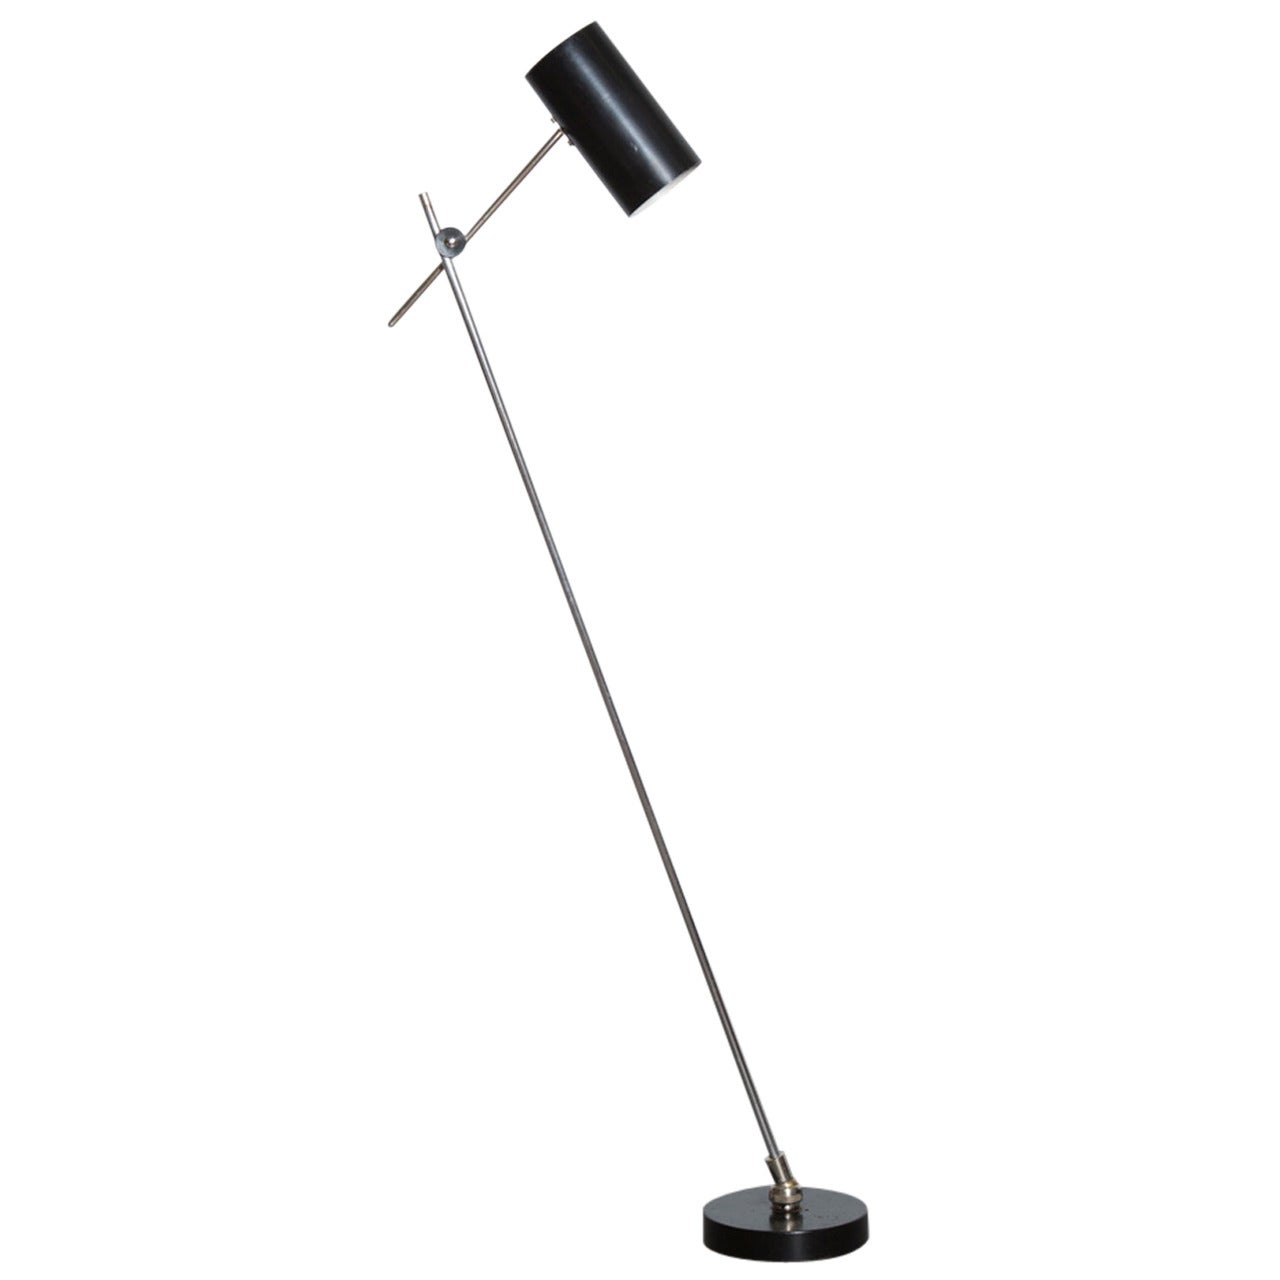 Hala Style Ball Jointed Black Industrial Floor Lamp